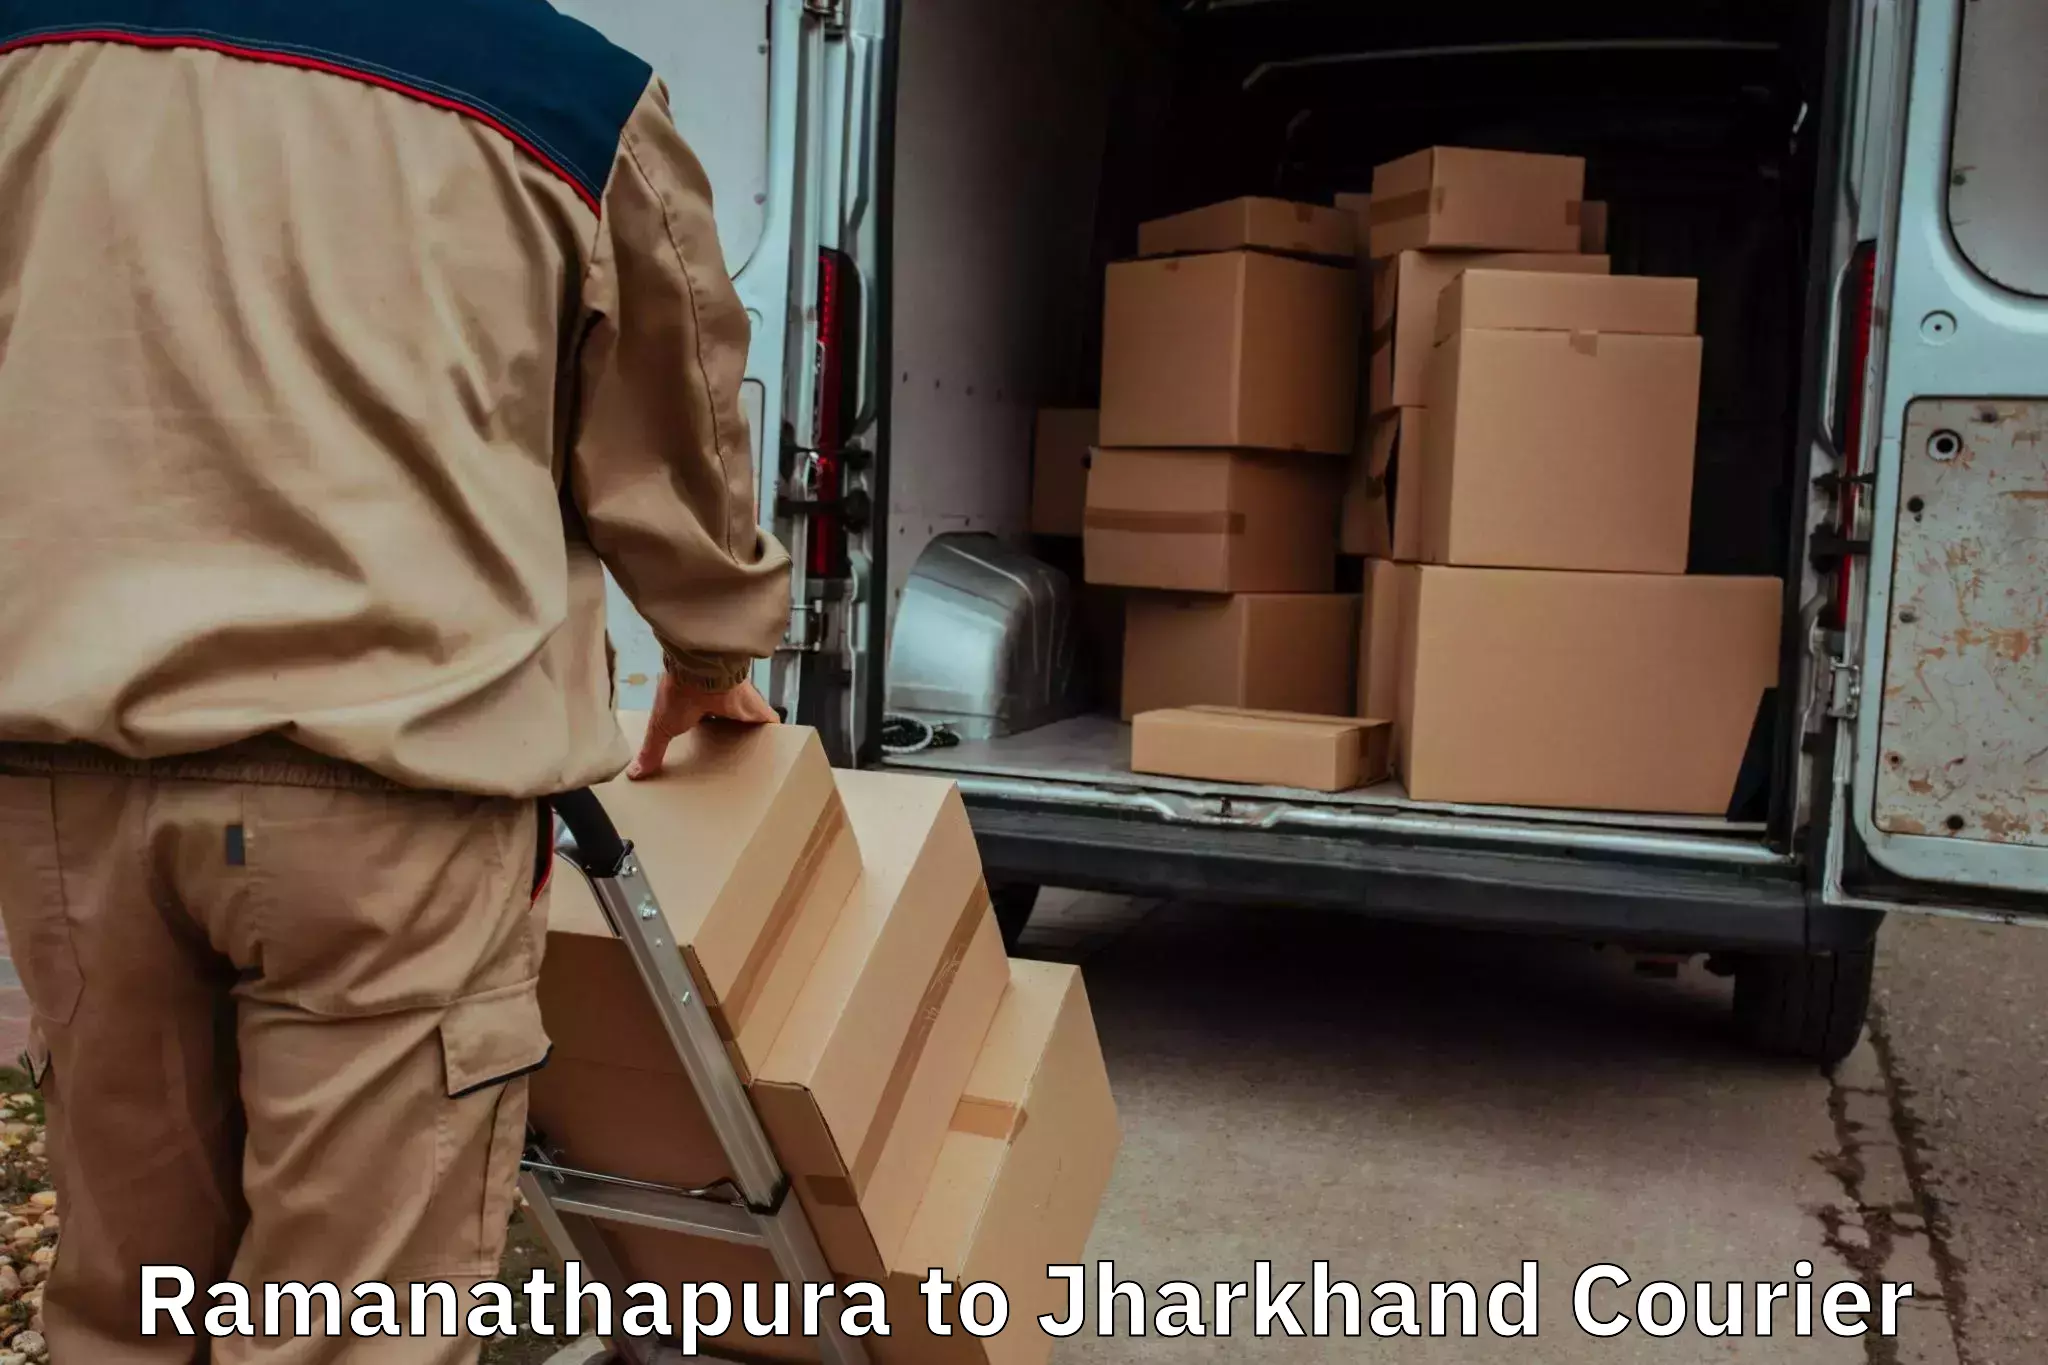 Quality moving company Ramanathapura to Tandwa